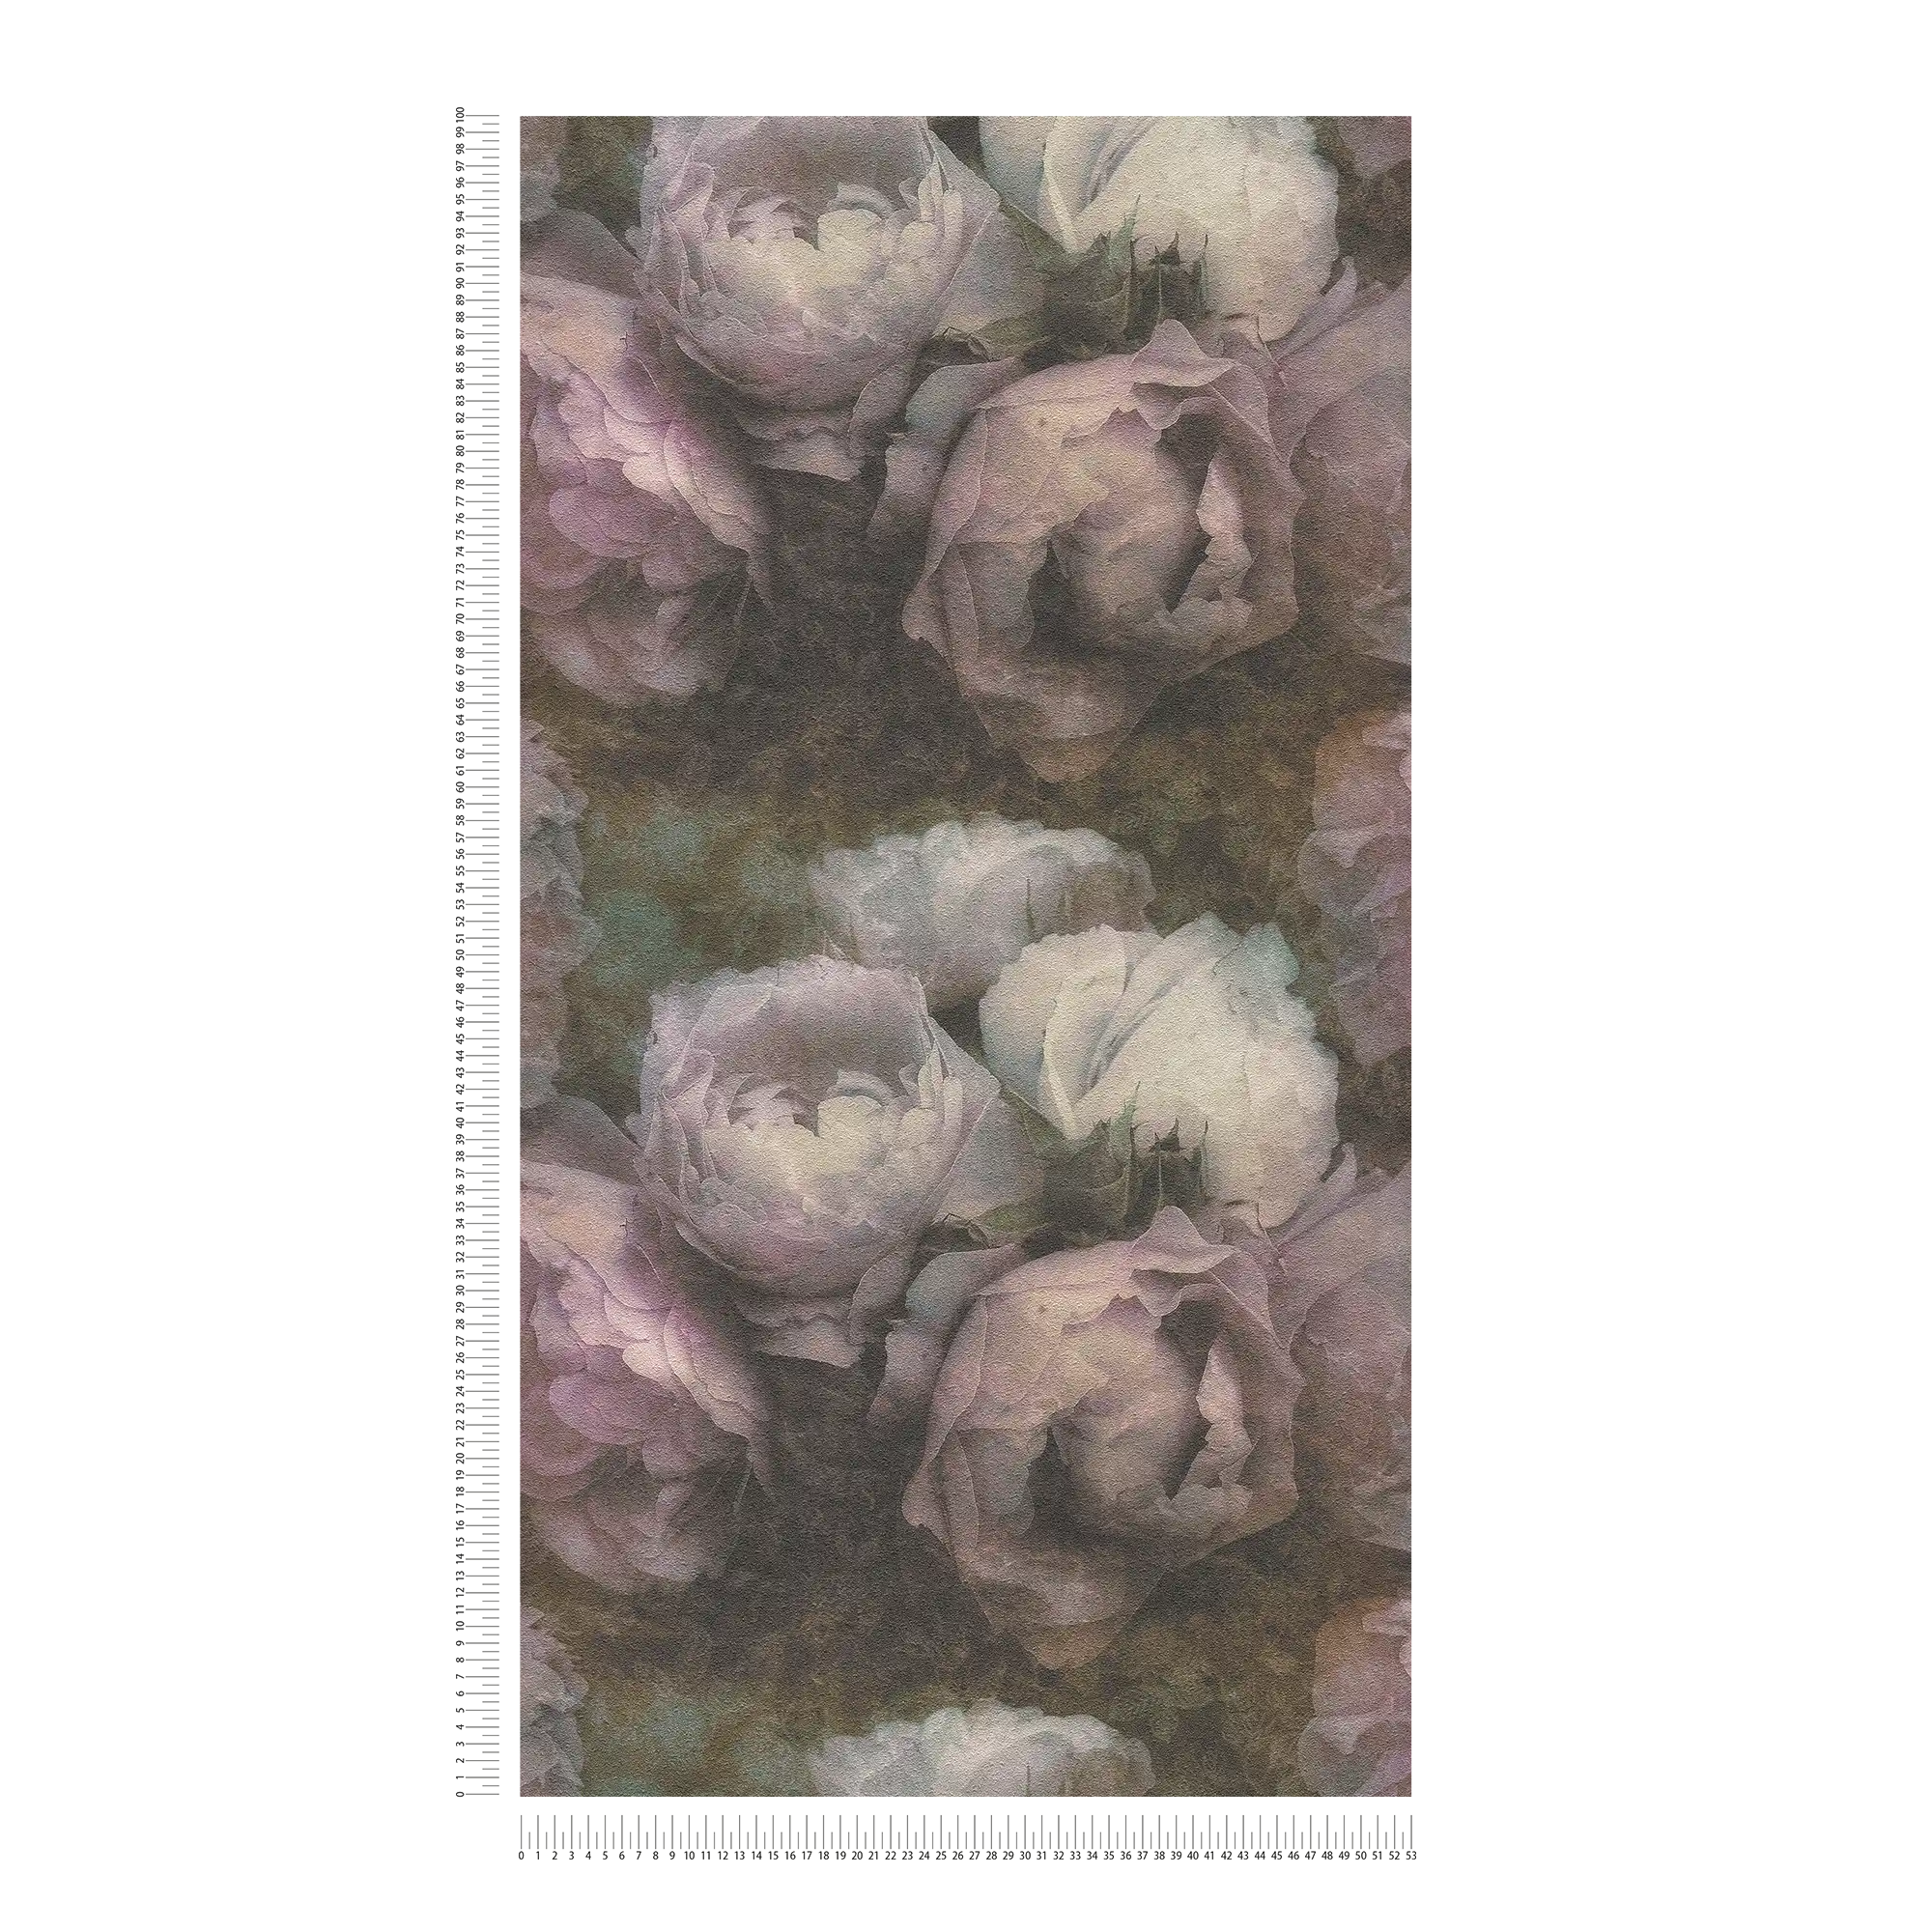             Tapete Pfingstrosen im Vintage Stil – Violett, Grau, Weiß
        